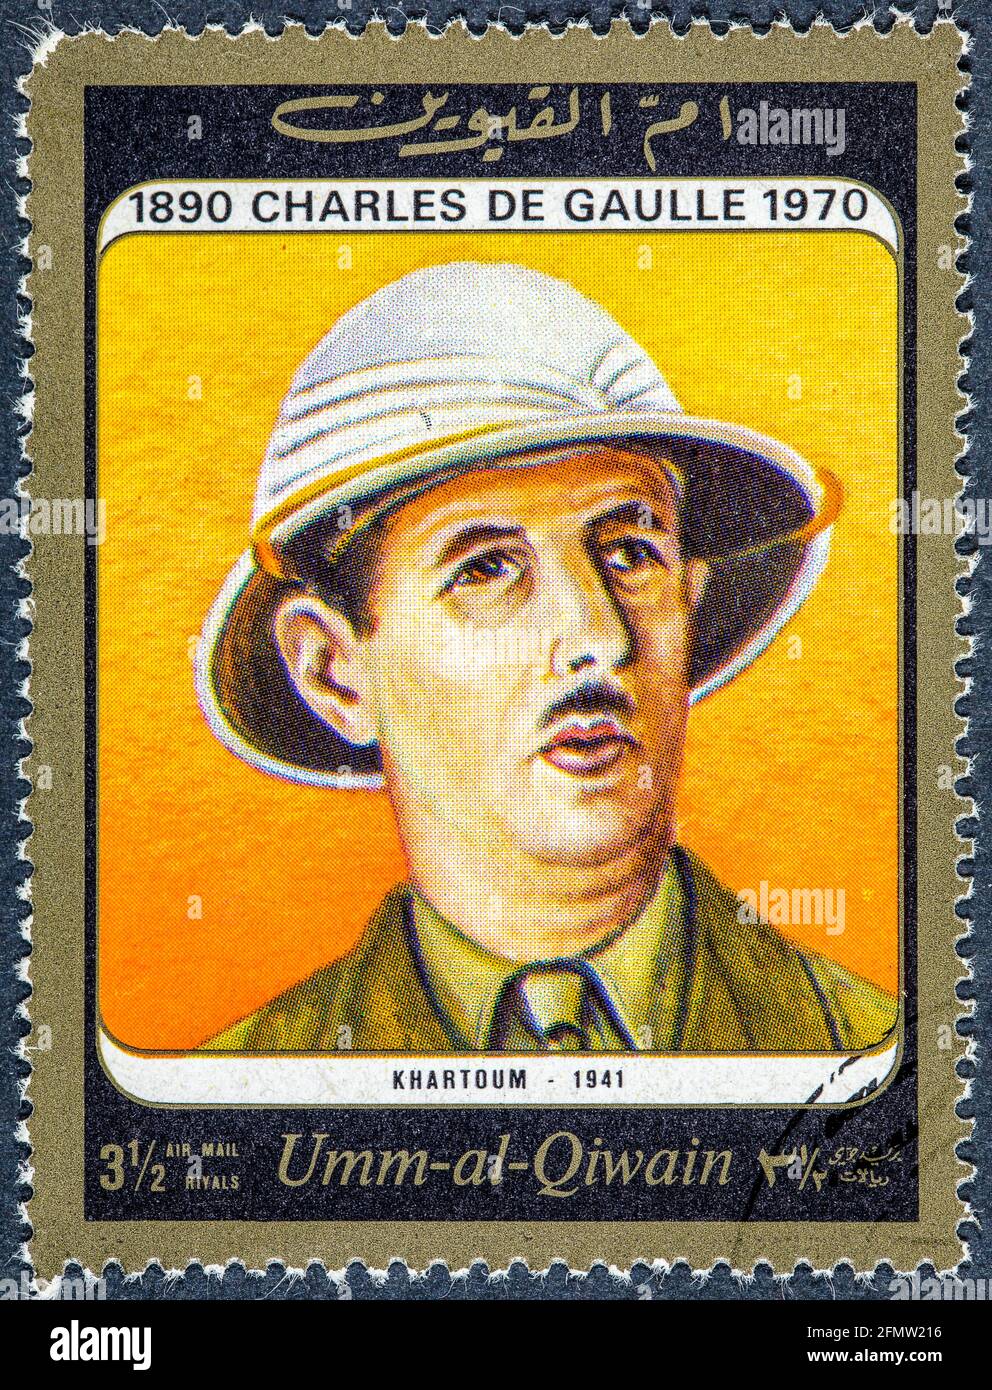 UMM AL-QUWAIN - VERS 1972 : un timbre imprimé dans l'Umm al-Quwain montre Charles de Gaulle, chef du président de la résistance du Franc Banque D'Images